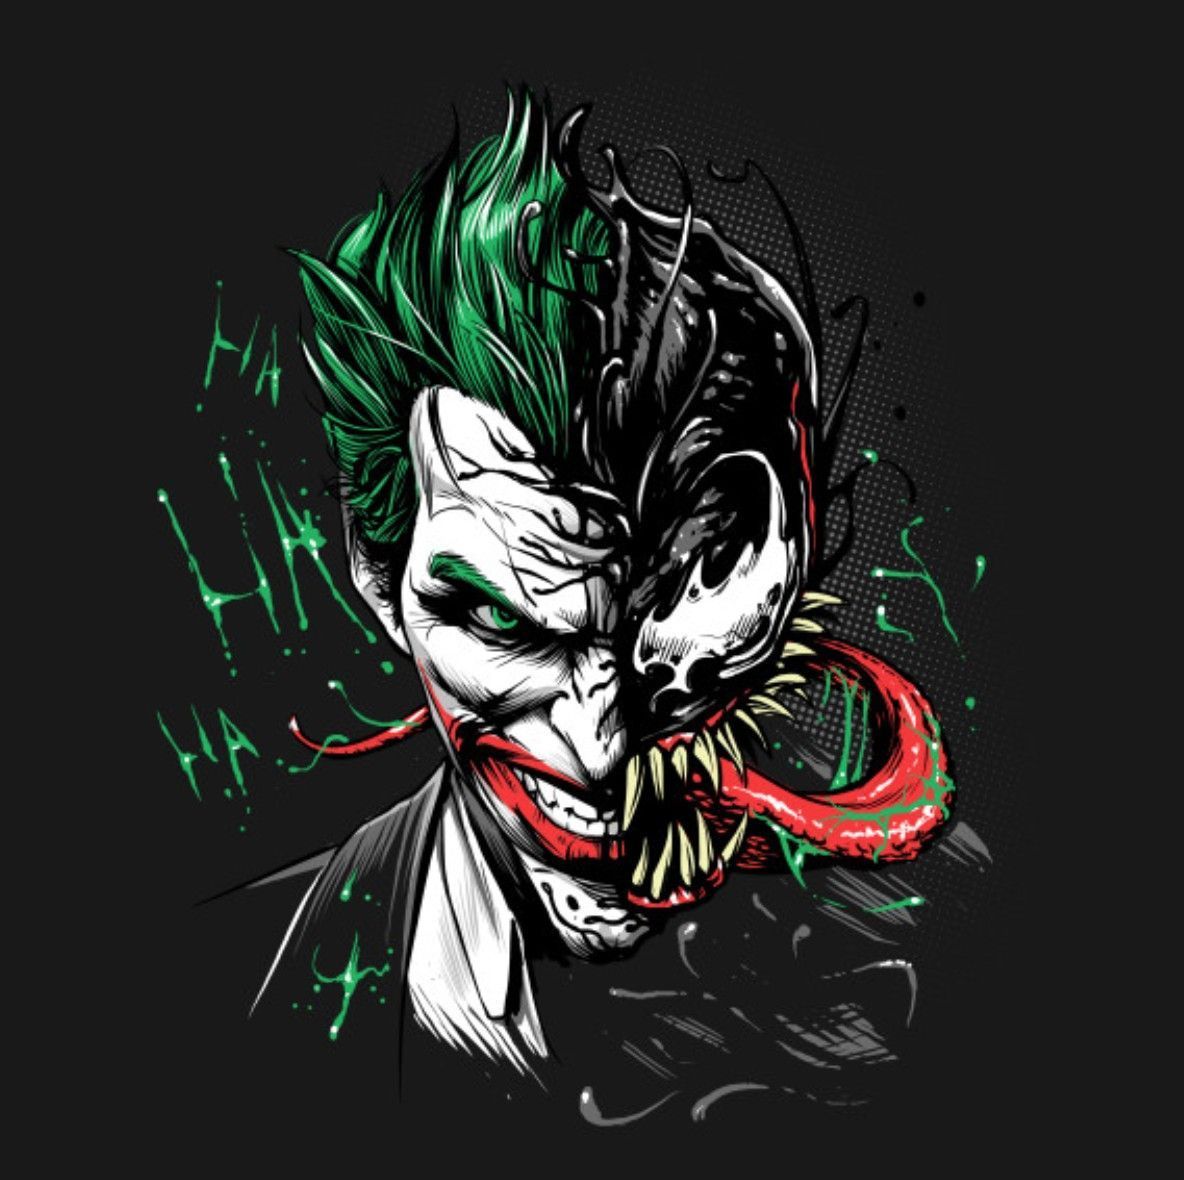 Venom and Joker Wallpaper Free Venom and Joker Background